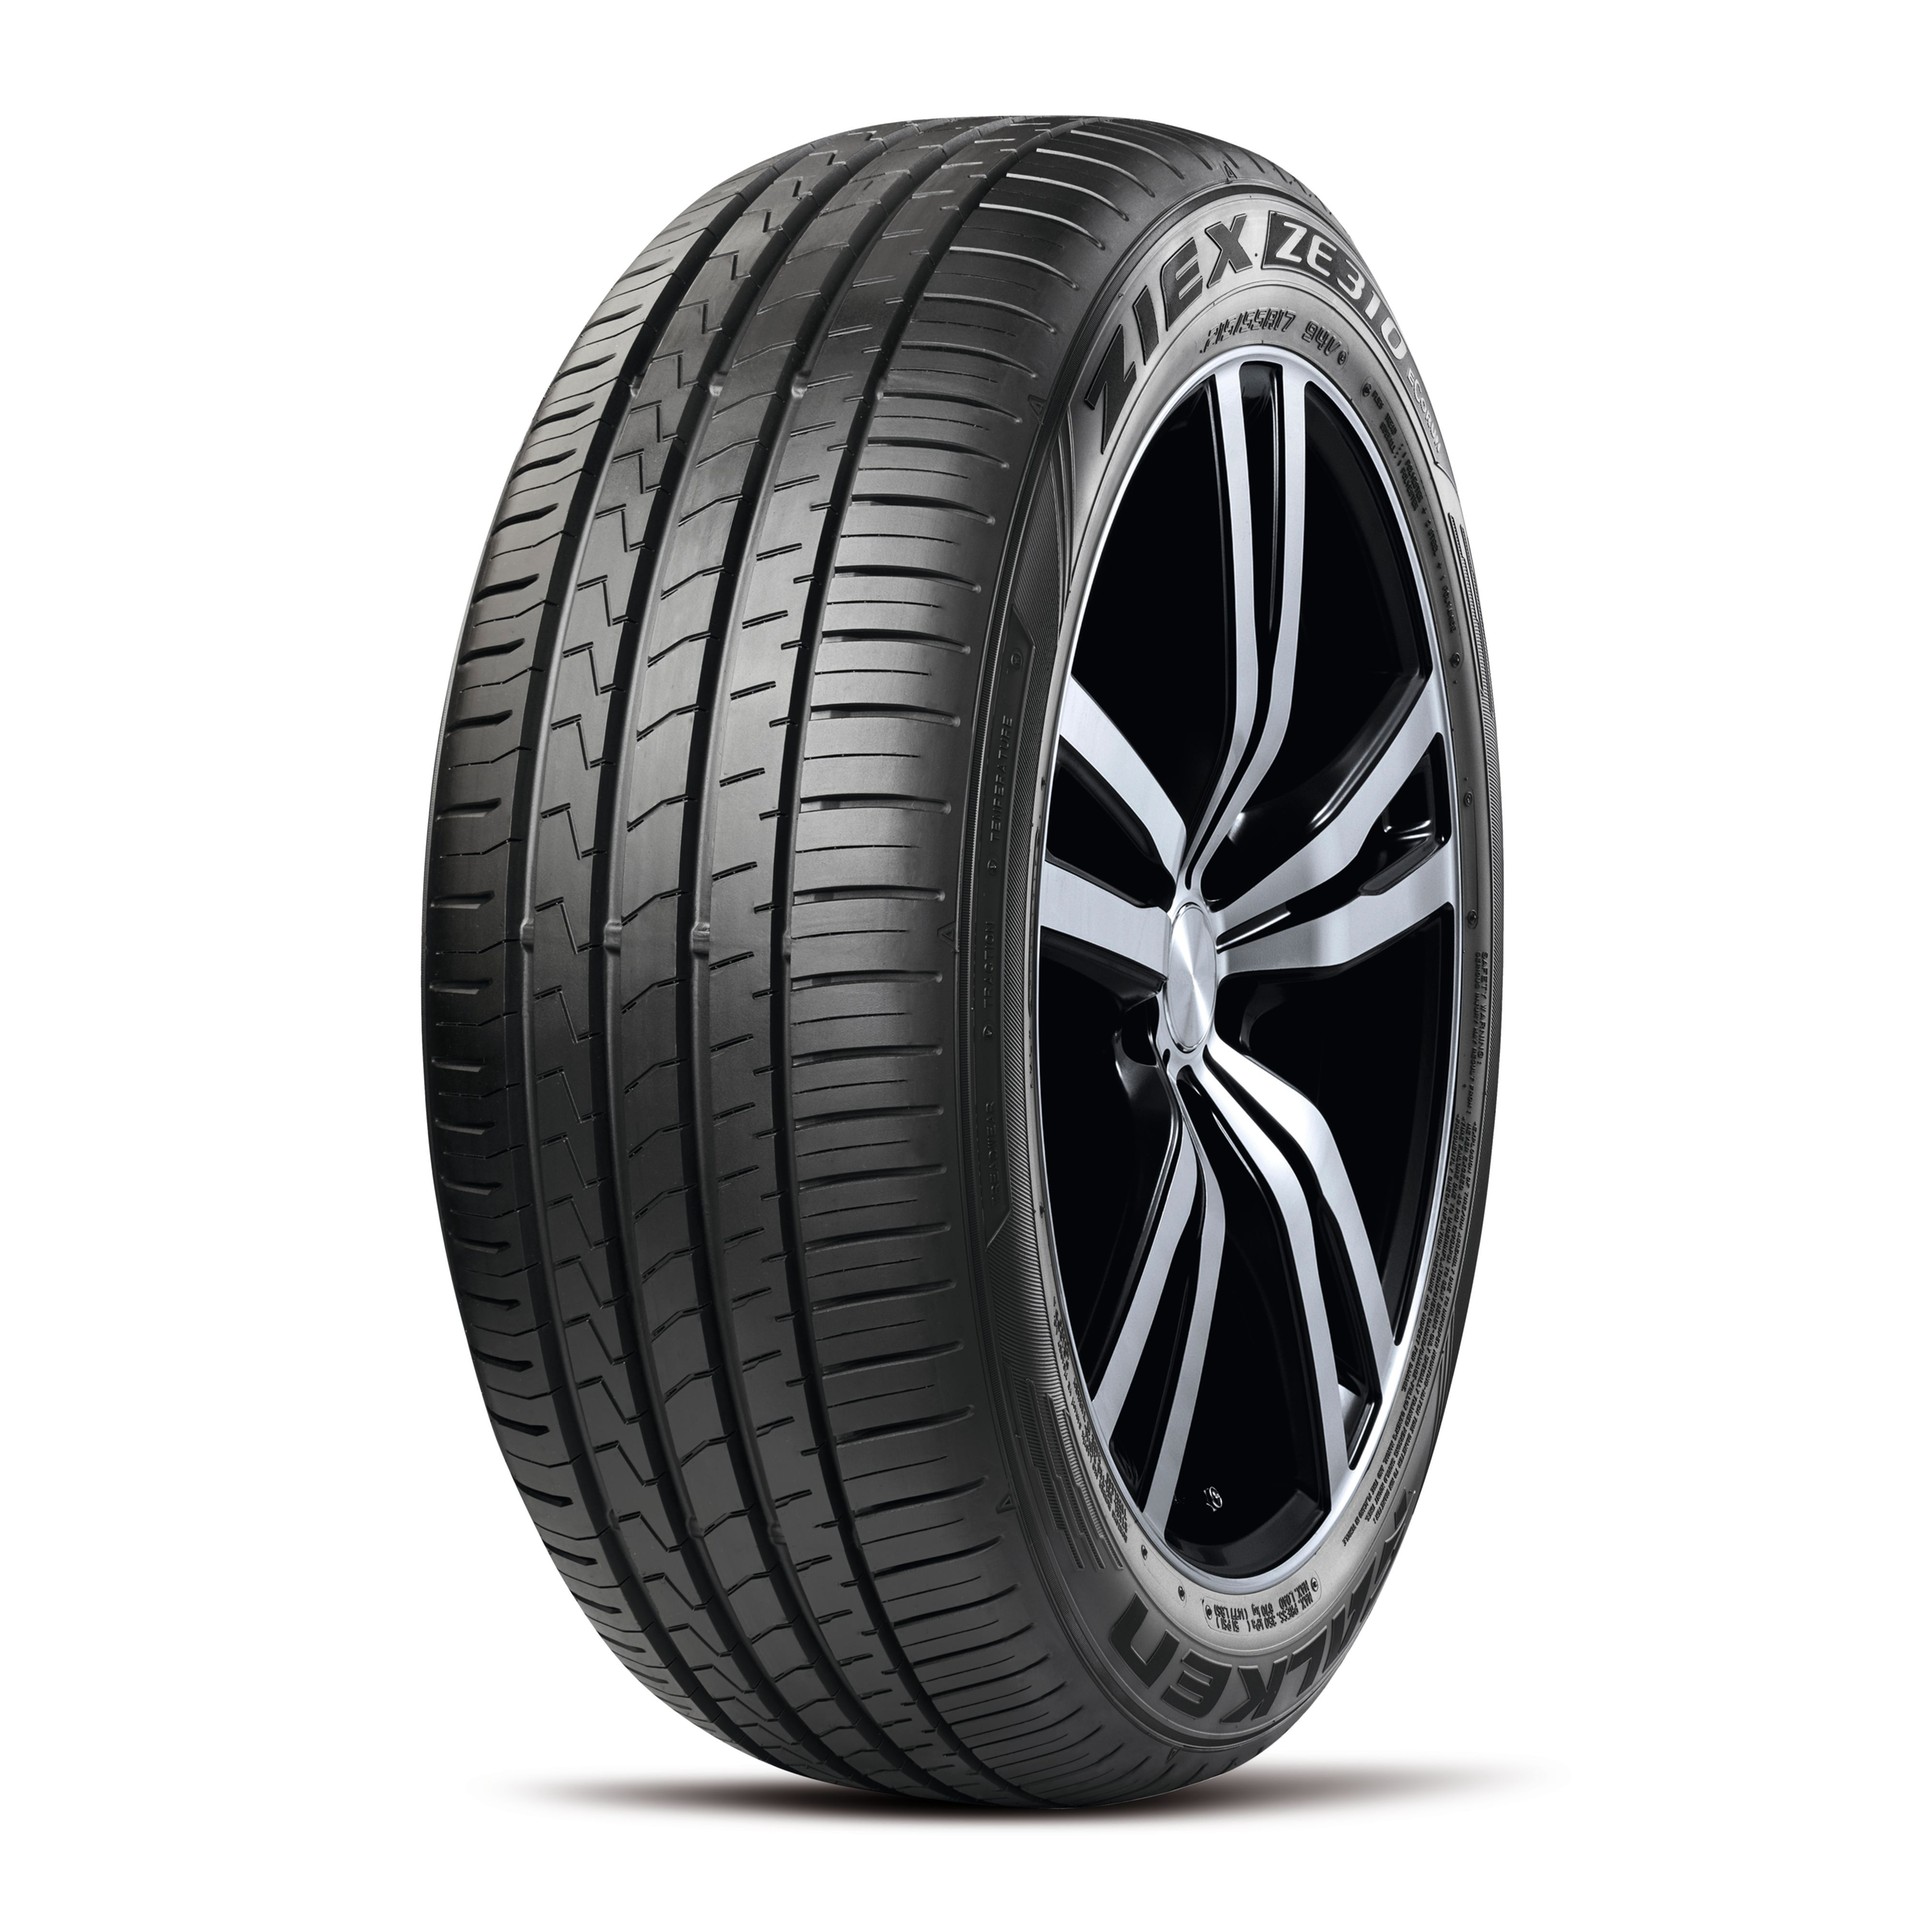 Falken ZIEX ZE310 EcoRun Page2 - Tyre Tests and Reviews @ Tyre Reviews